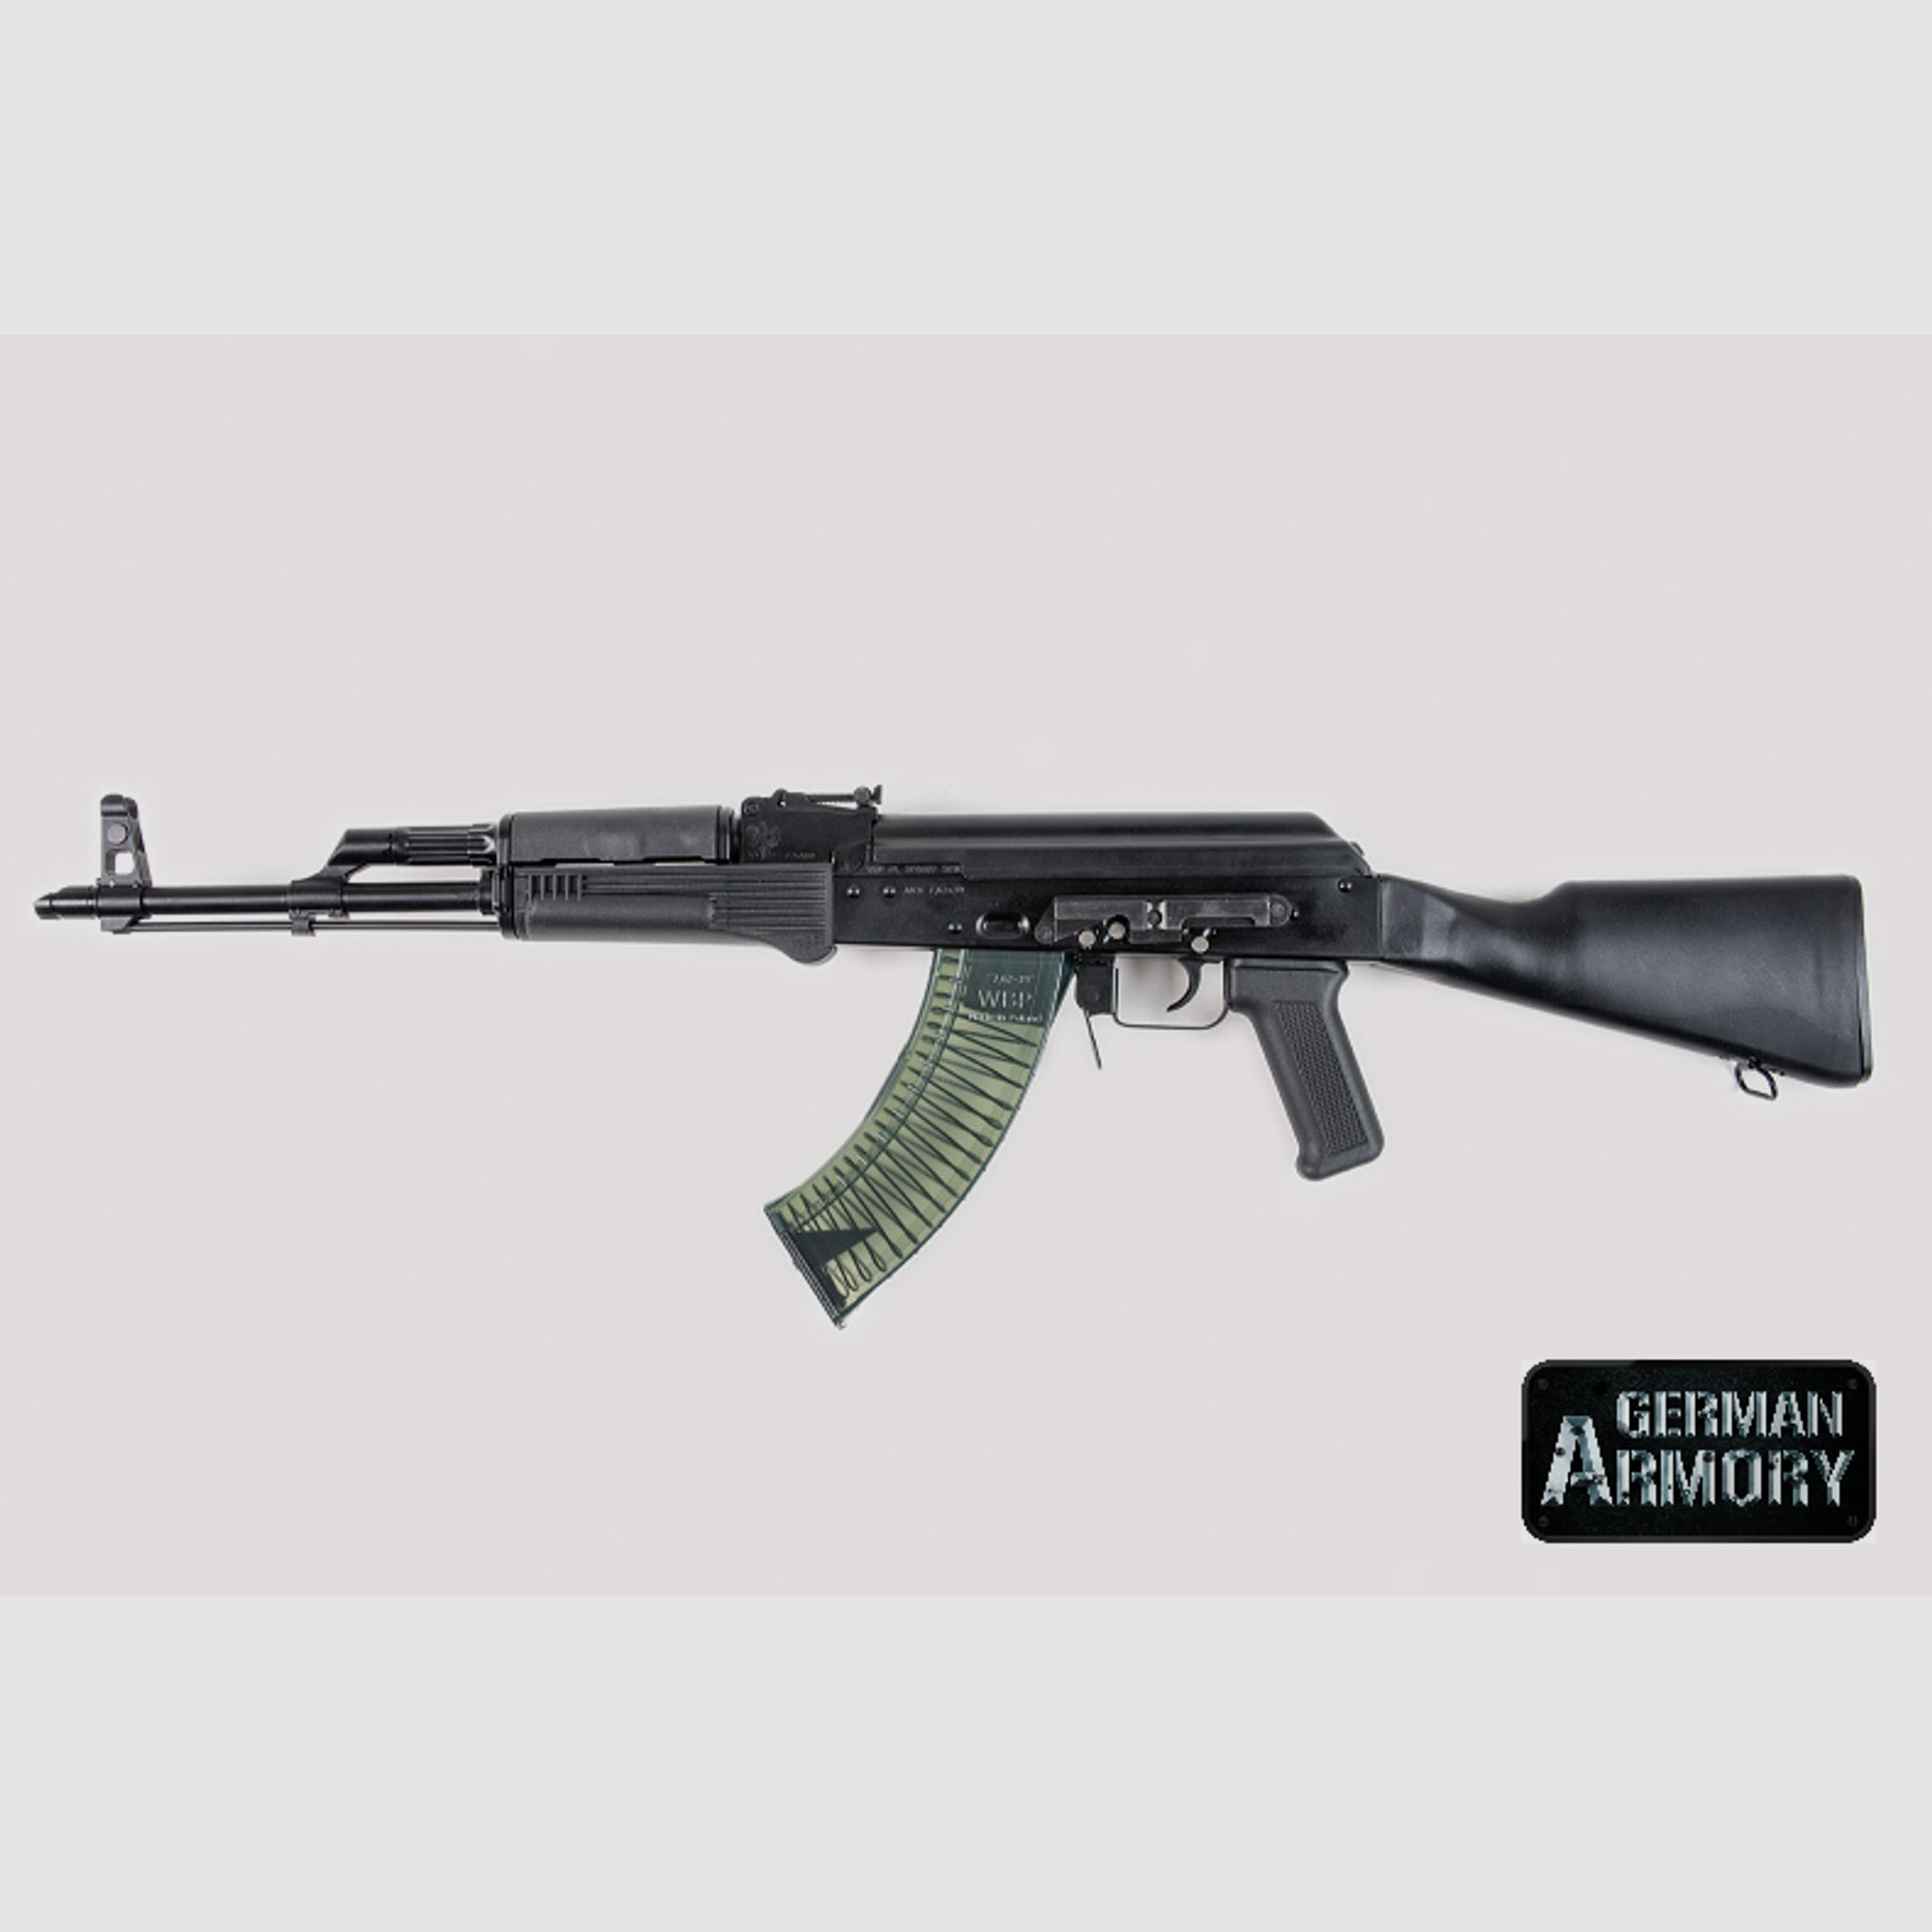 WBP Schaftset Polymer schwarz AK-103 AKM 47 74 Cugir Saiga Vepr Schulterstütze Handschutz komplett